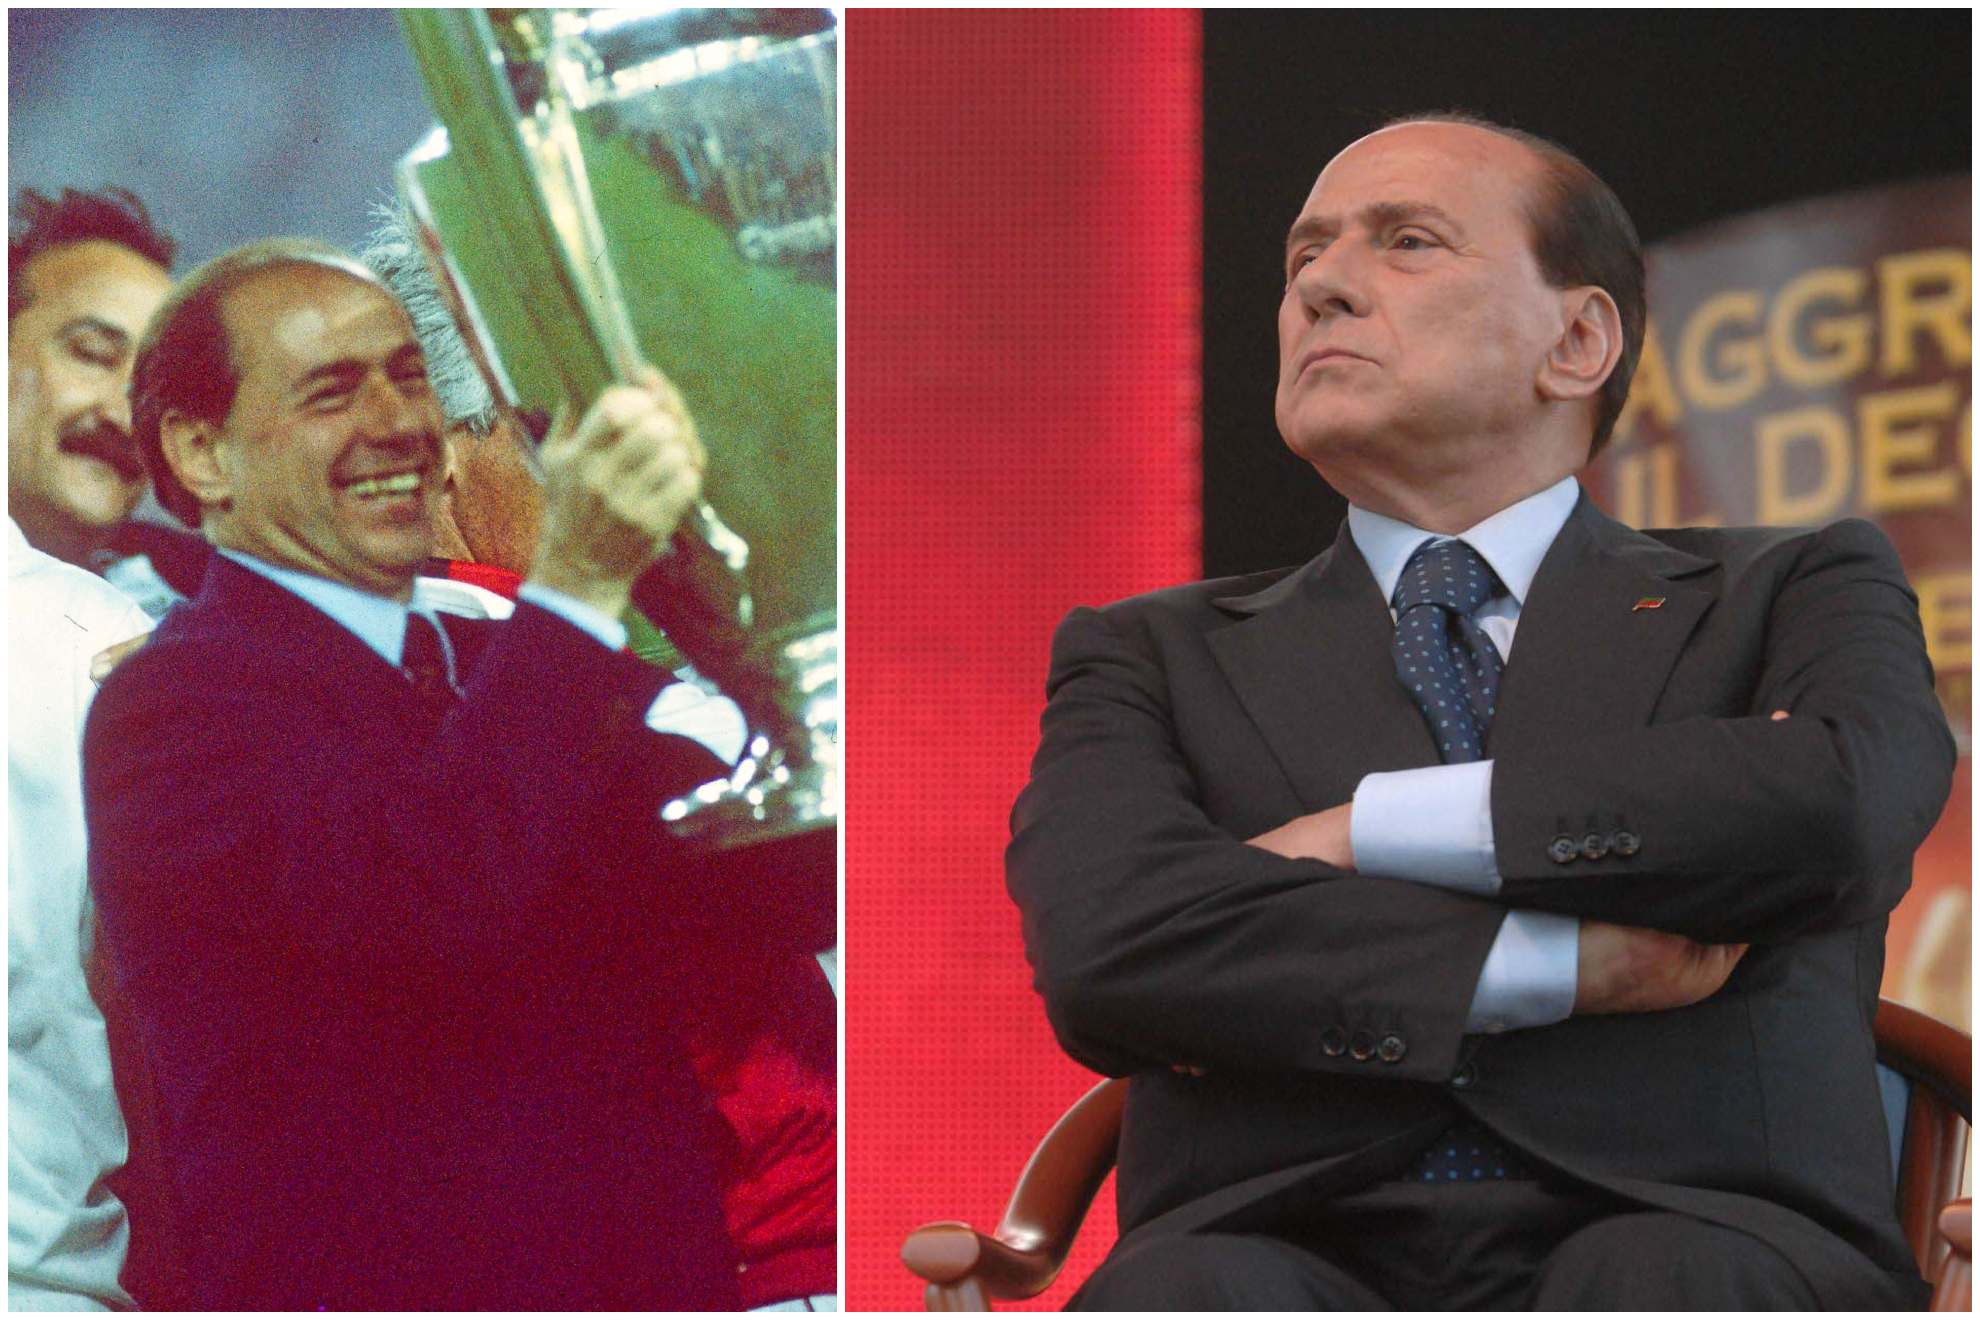 Silvio Berlusconi, the man who changed football, has died